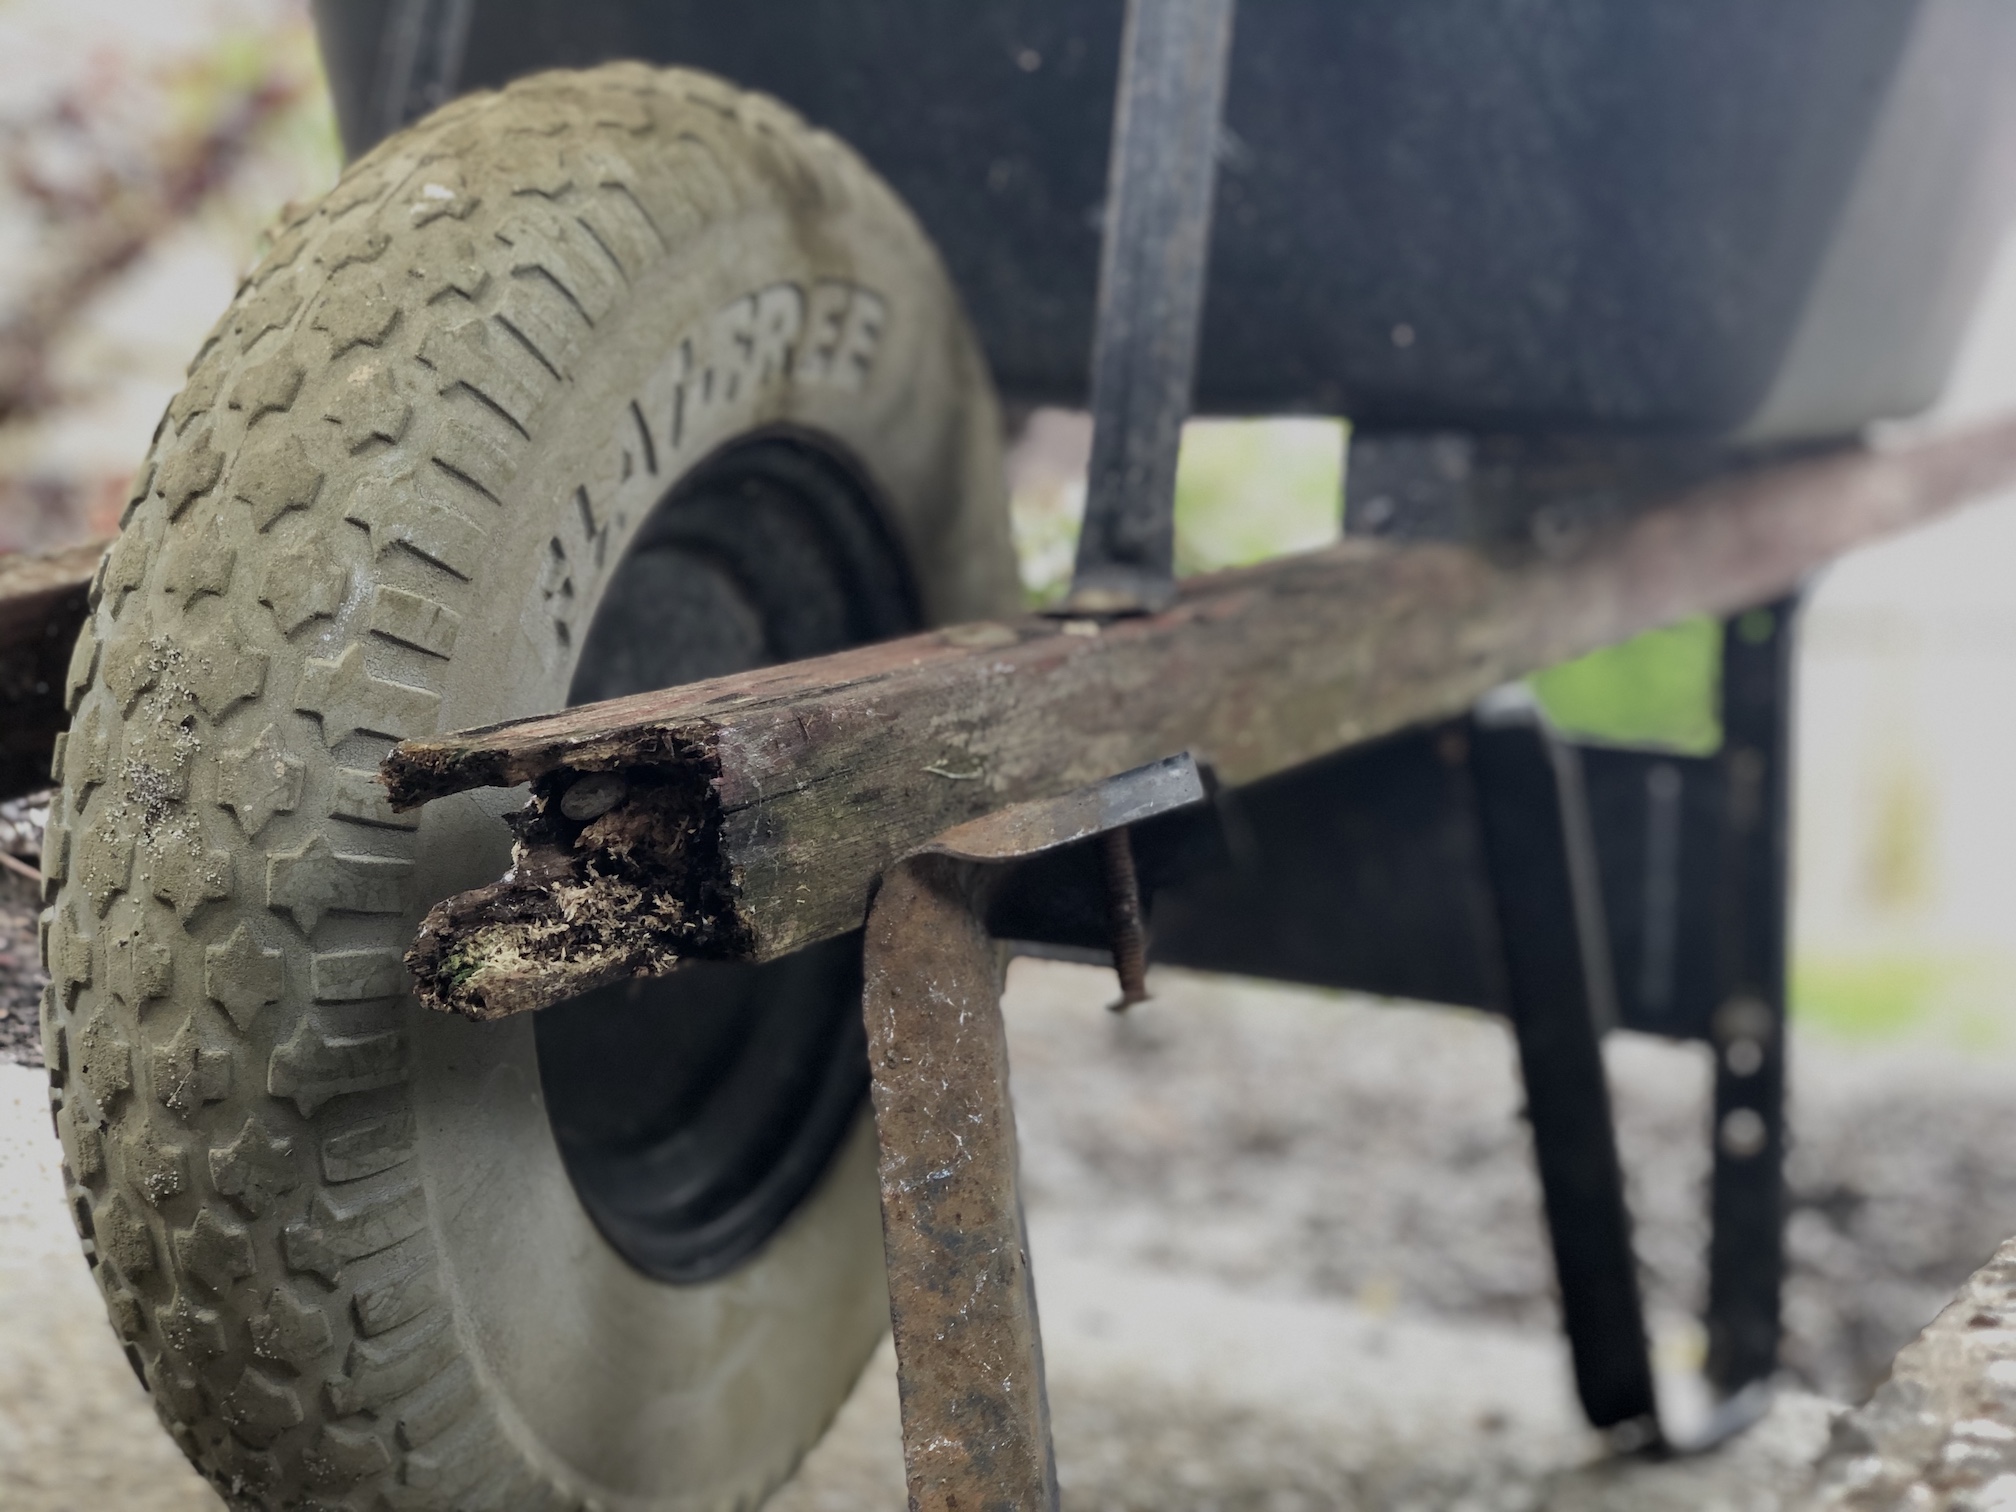 Rotted Wheelbarrow handle